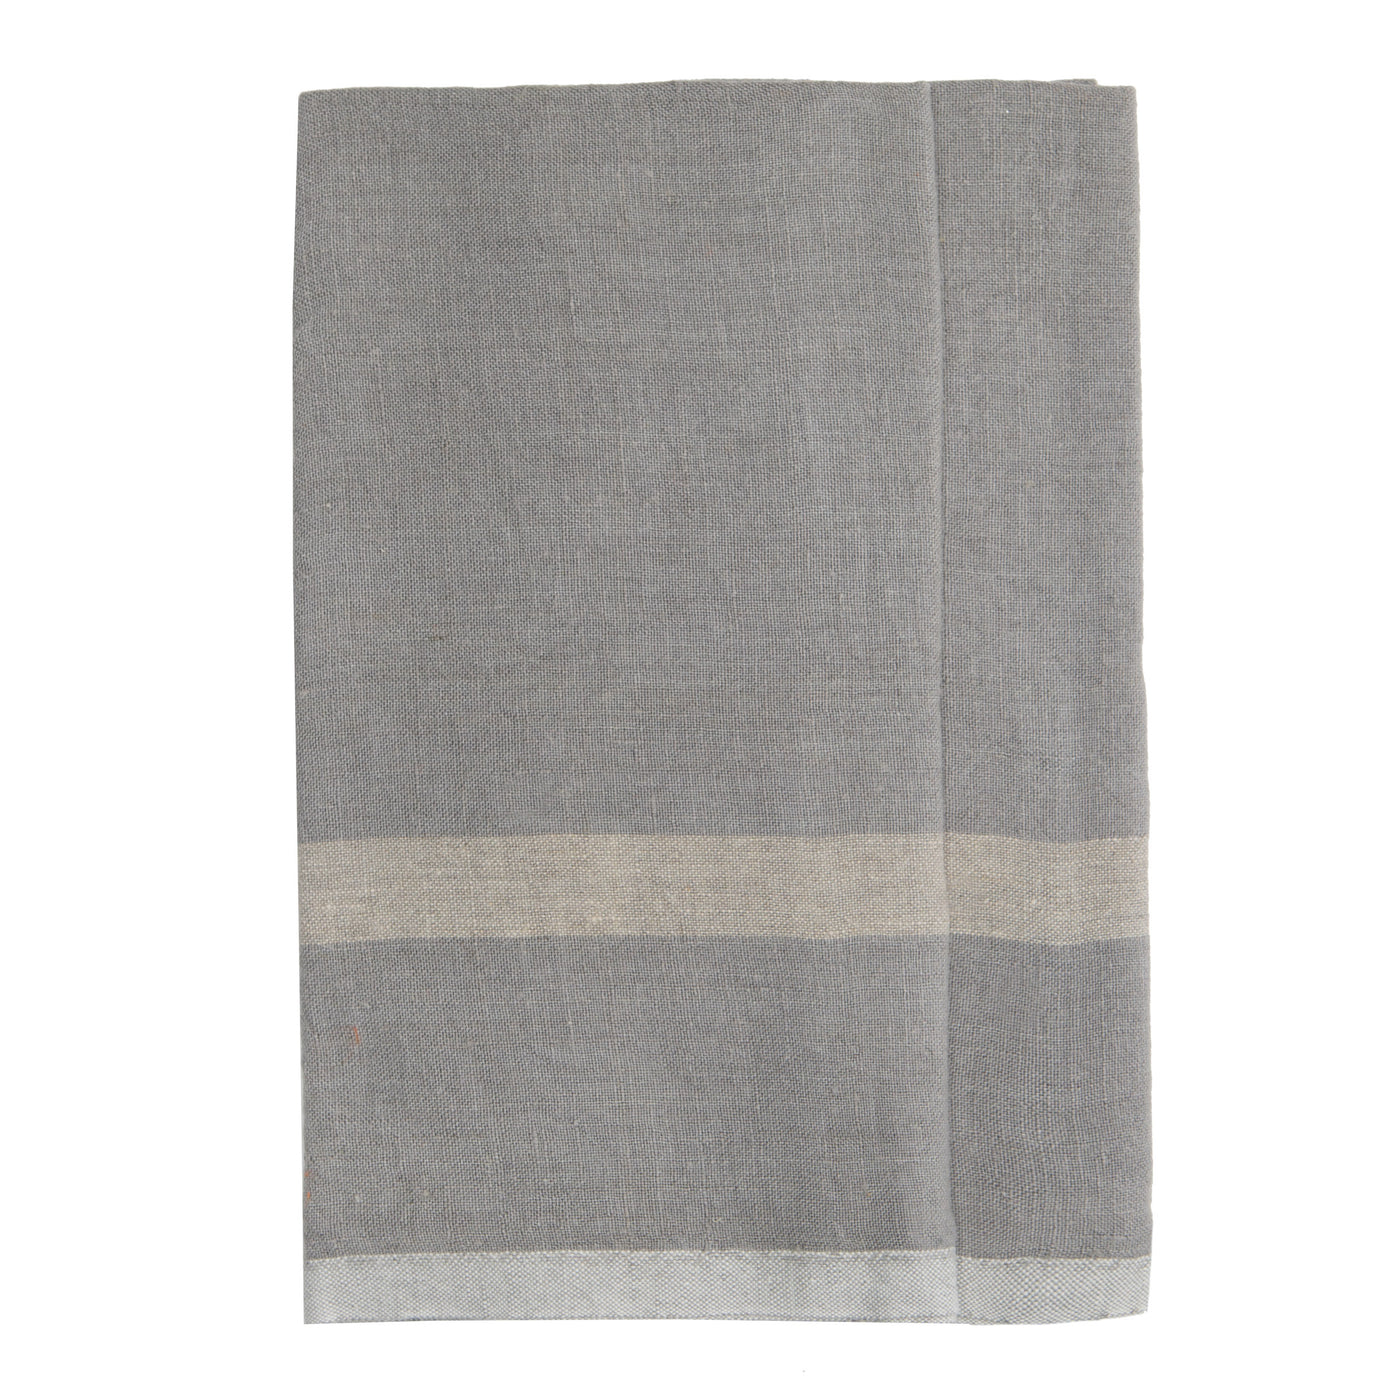 Laundered Linen Kitchen Towels Grey & Natural, Set of 2